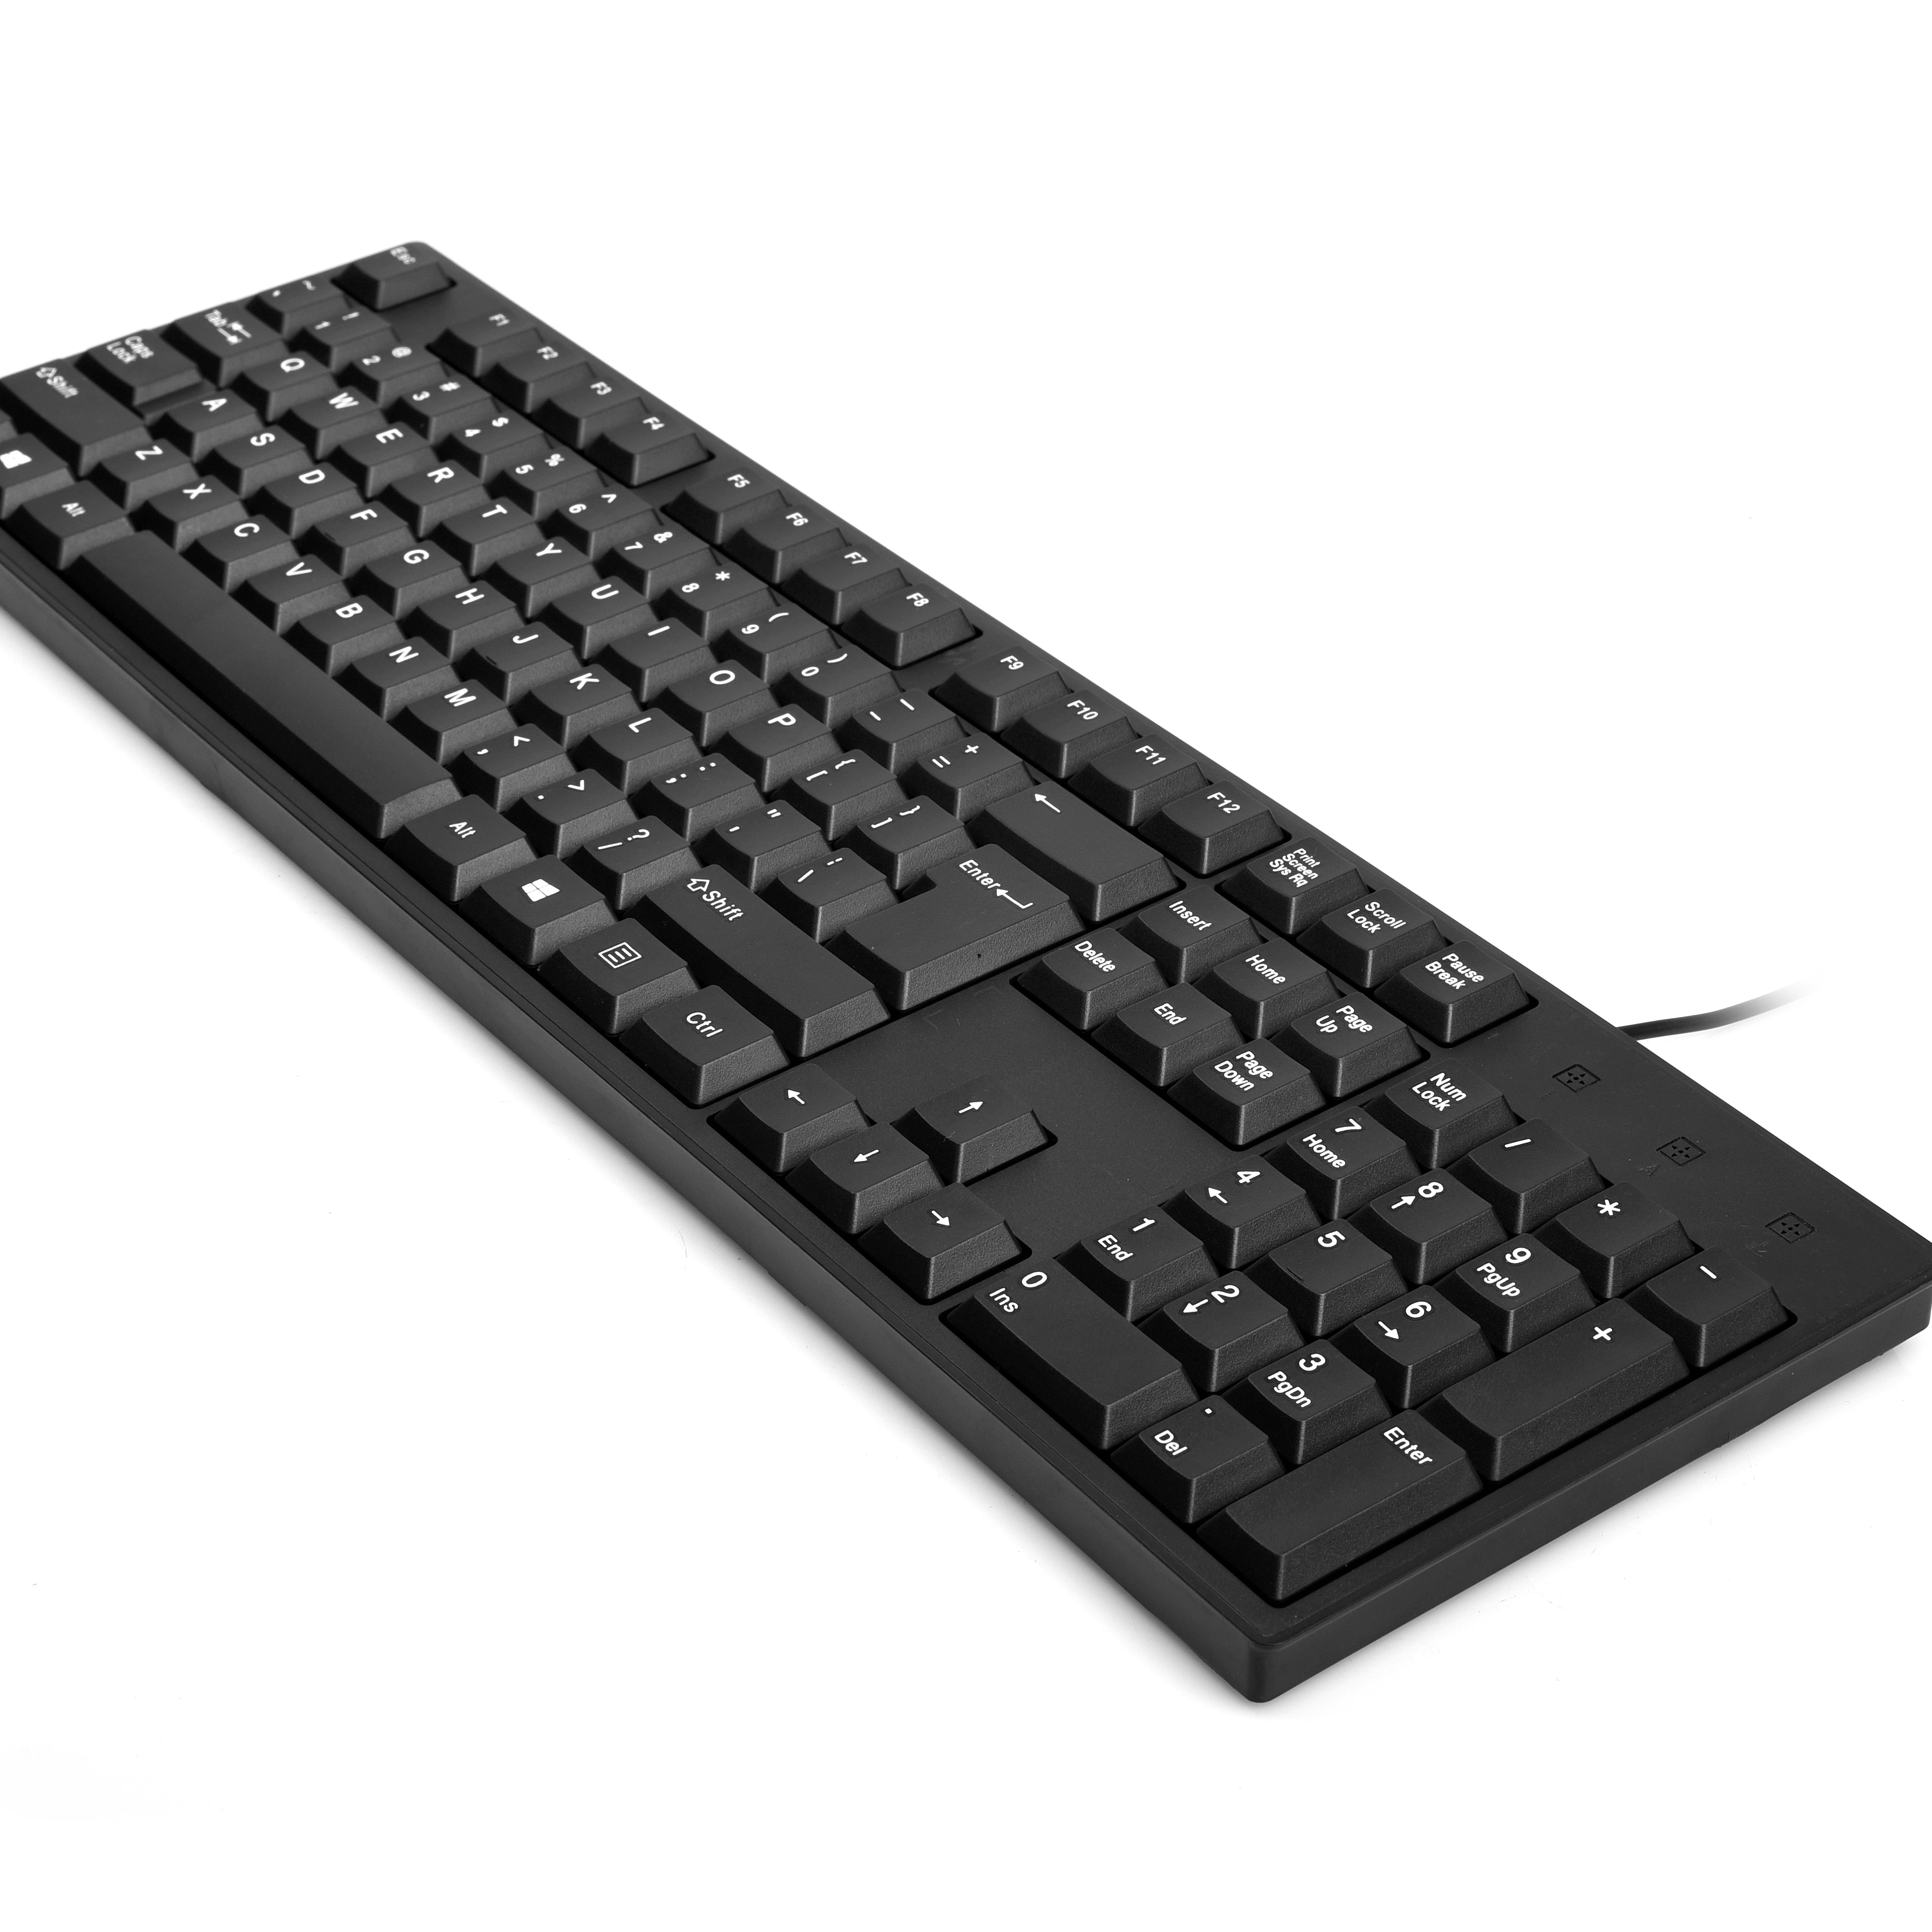 

SUNDI High quality 104 Keys Wired USB Waterproof Black PC Laptop K 101 Keyboards Office Computer keyboard K-101